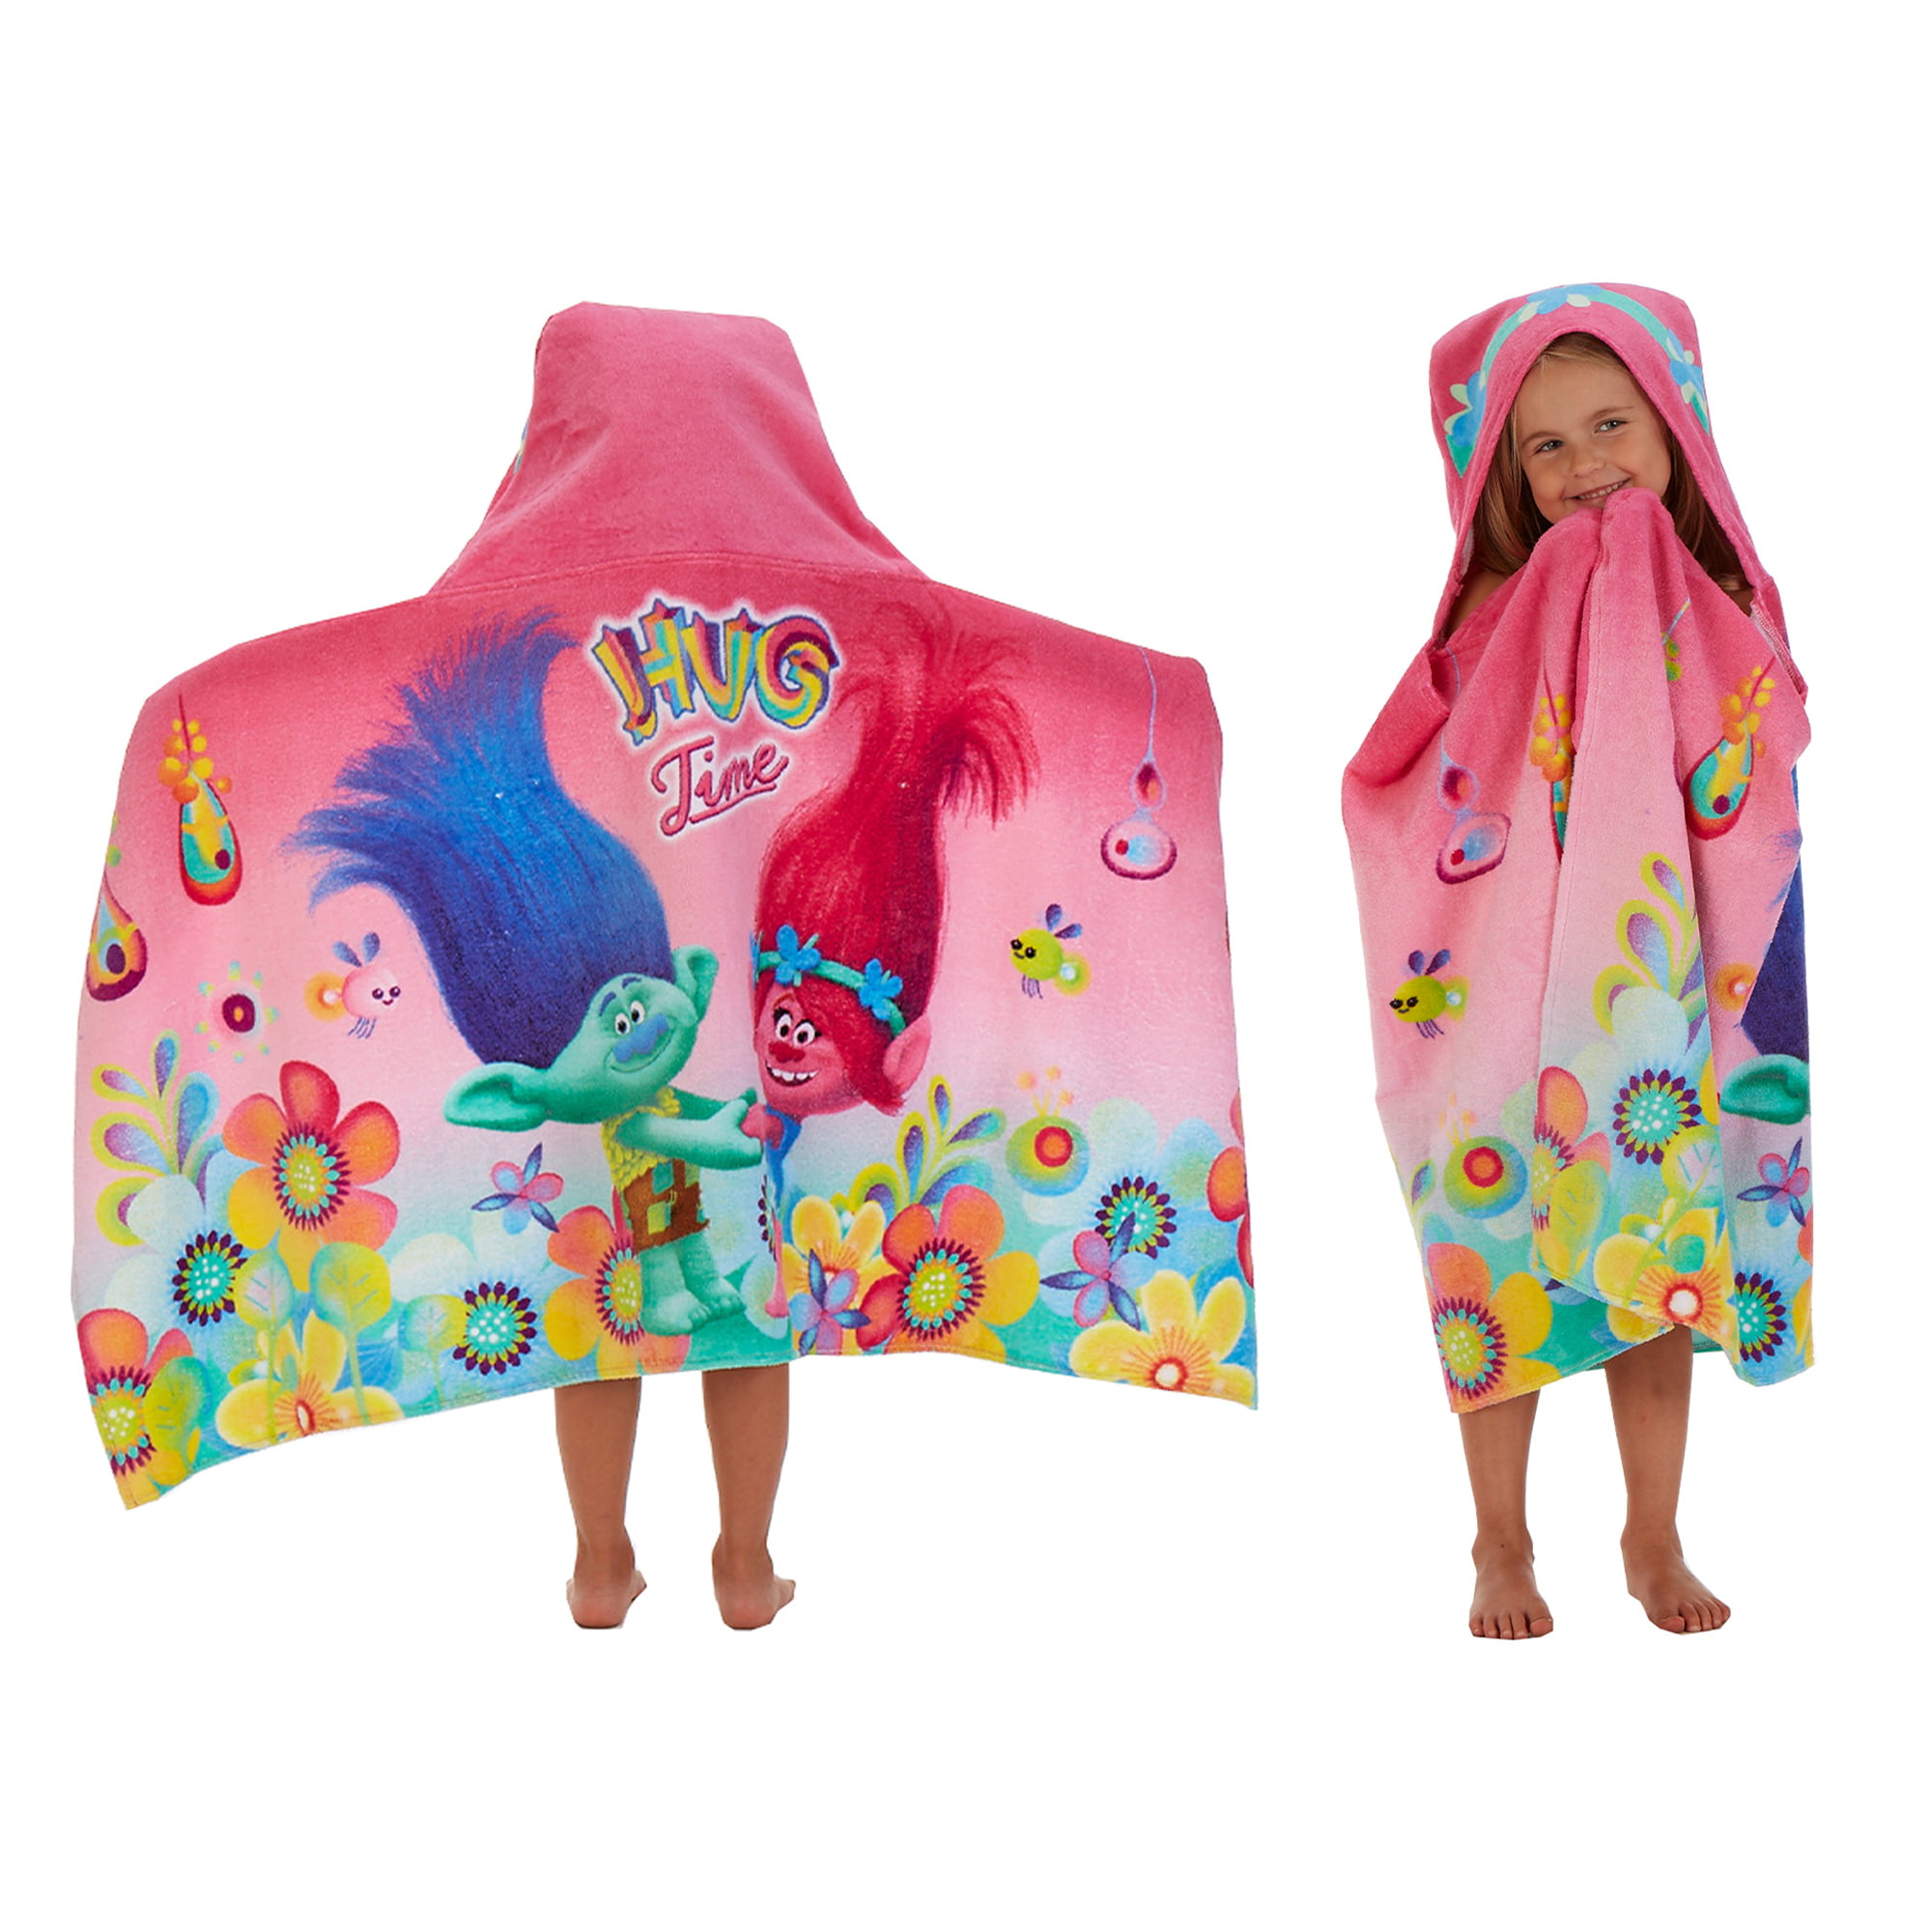 LOL Beach accessories Surprise Dolls Towel Poncho Cotton Swimming Bathtime 